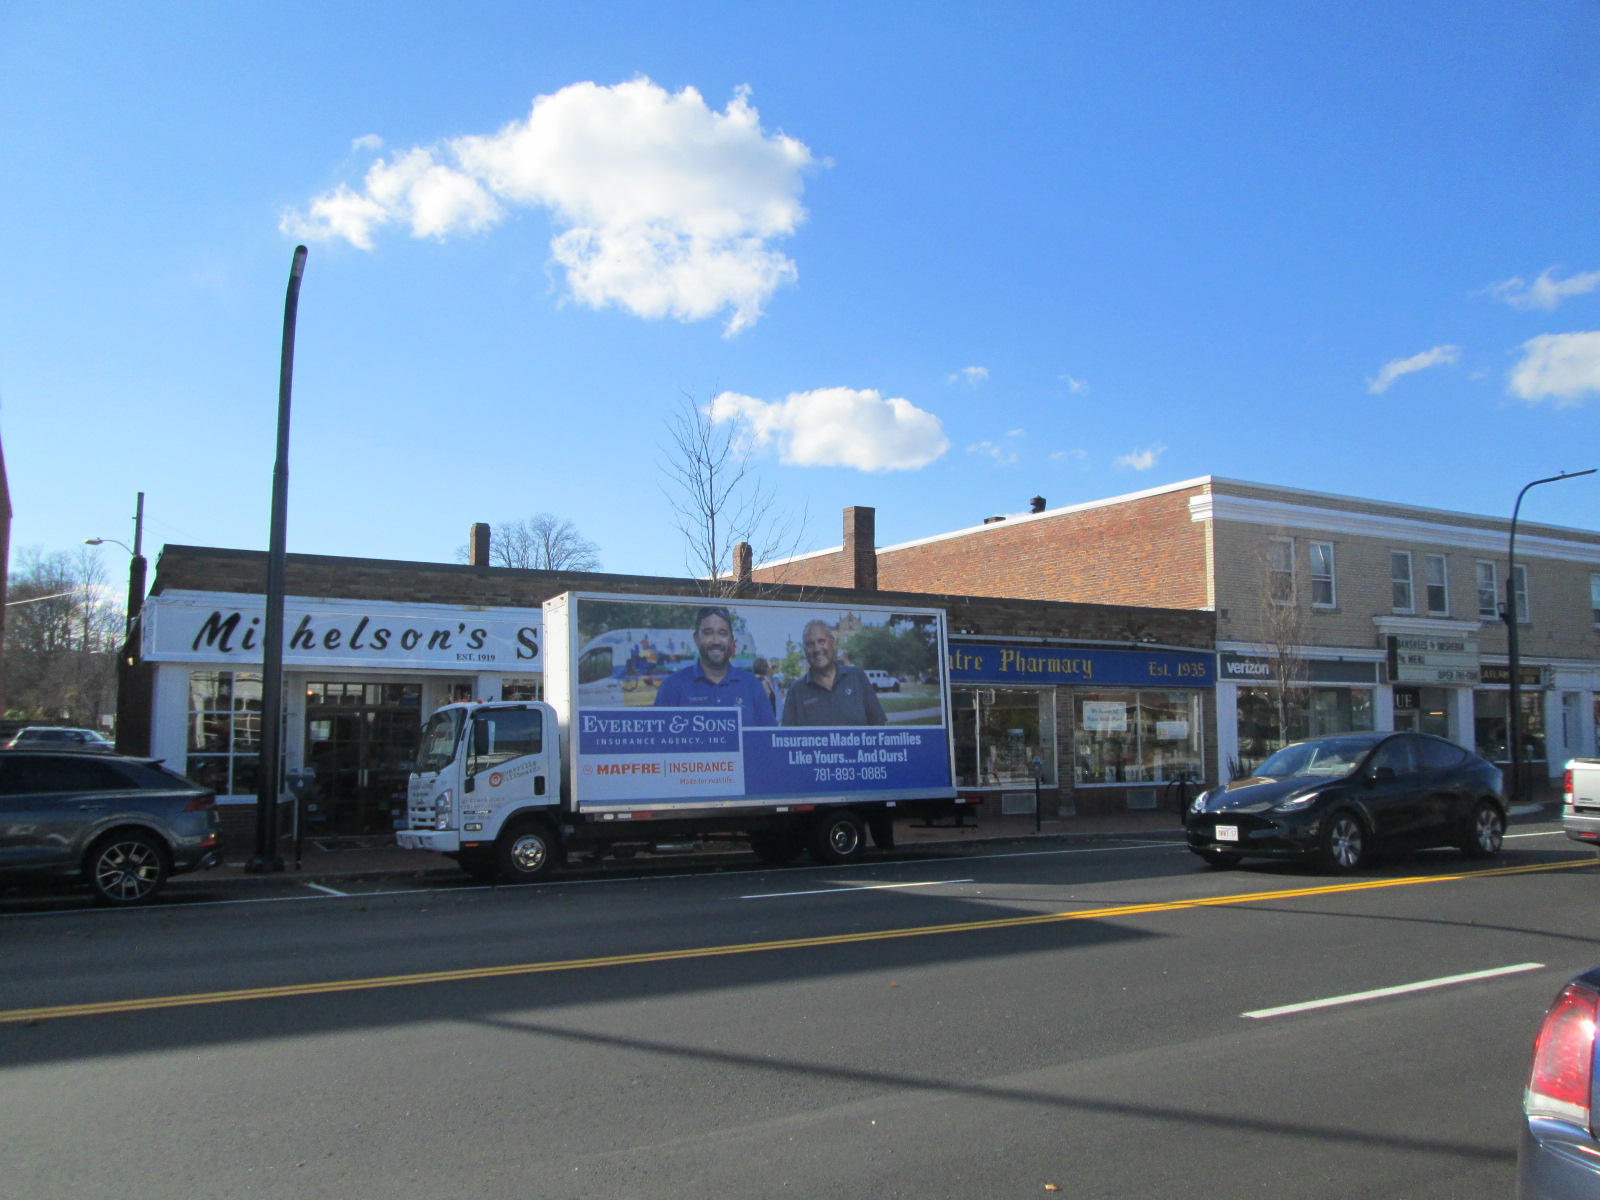 Mobile billboard truck stopped on Massachusetts Avenue in Lexington MA